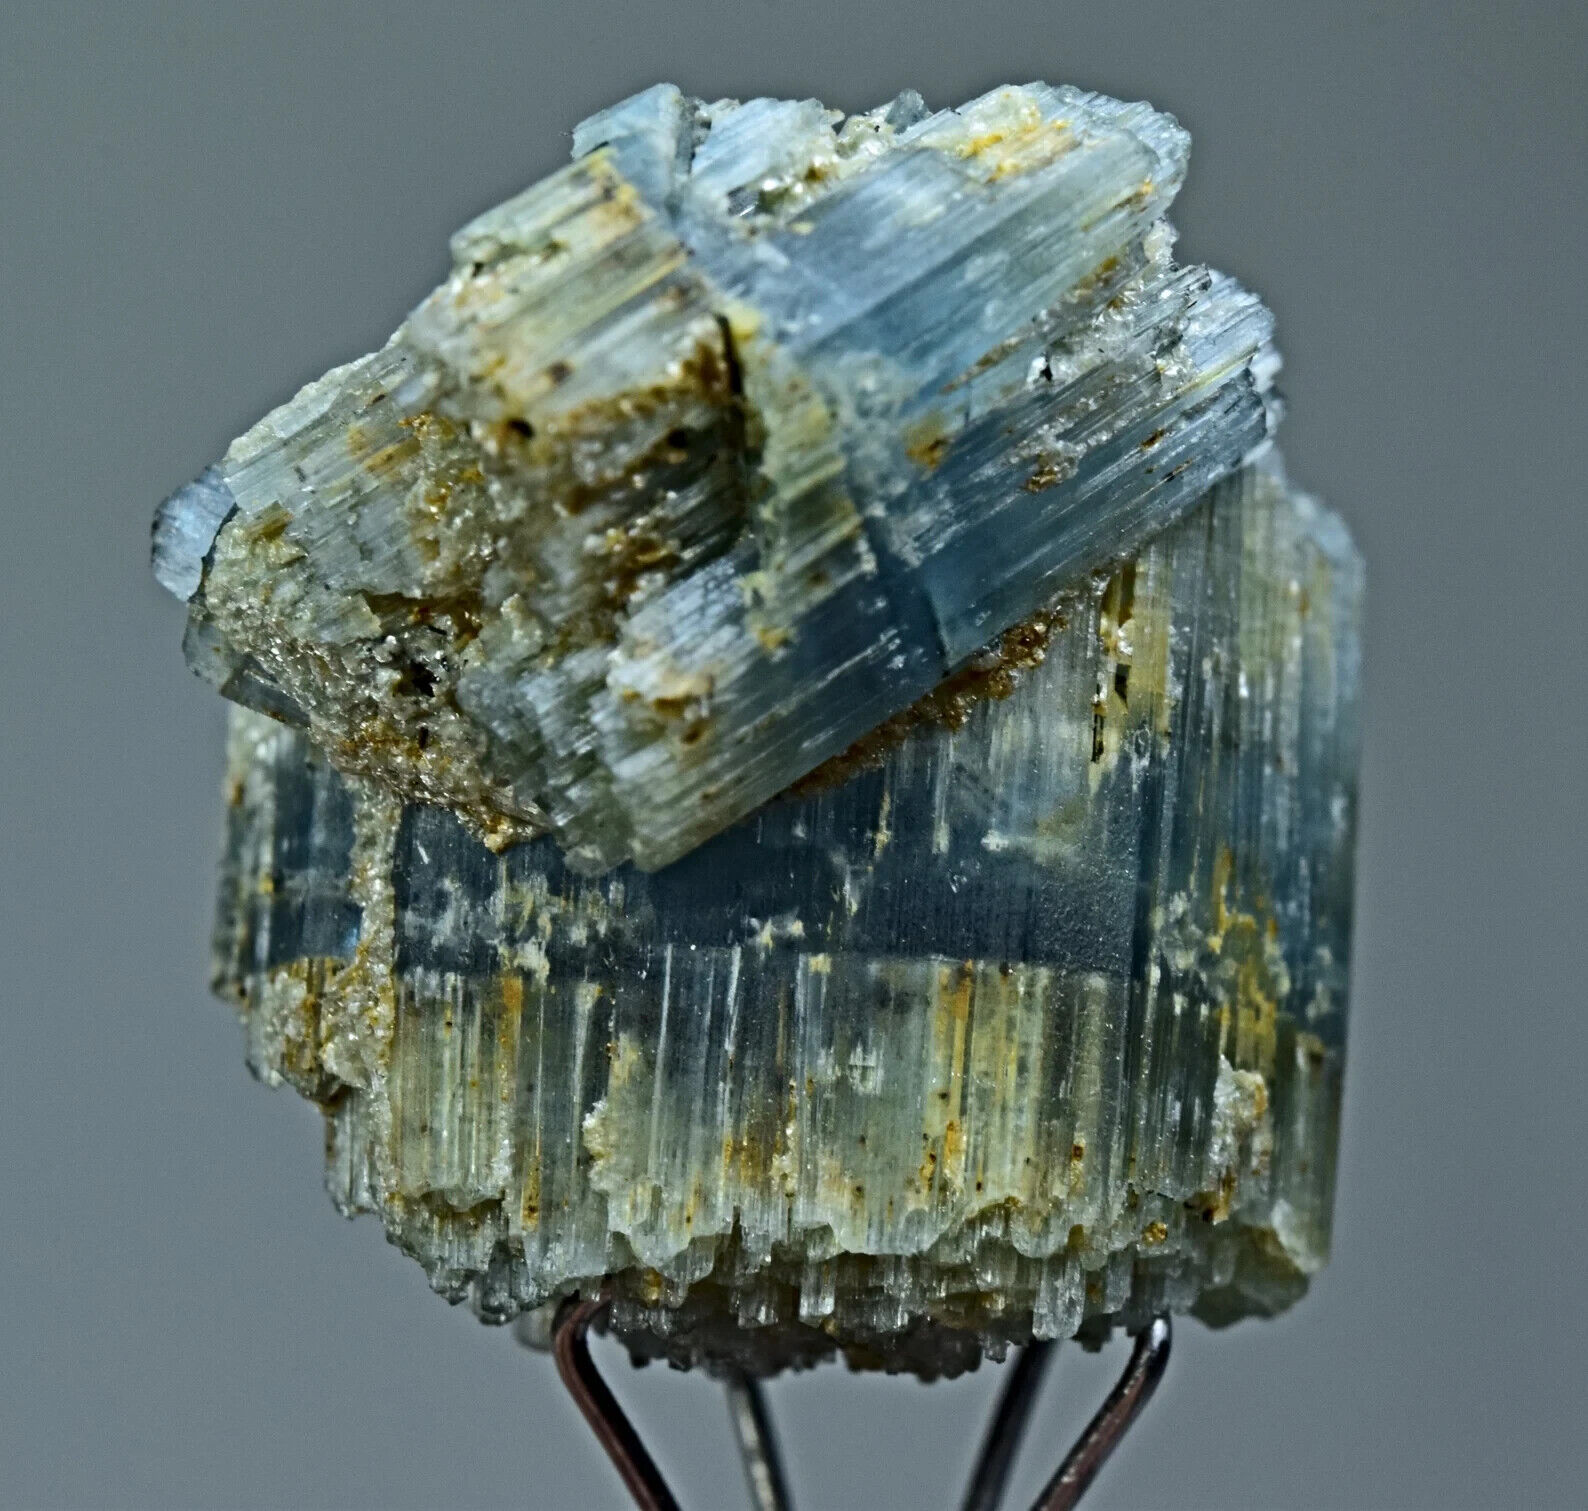 13 Carat Unusual Unique Vorobyevite Beryl Rosterite Crystal with Tiny Tourmaline